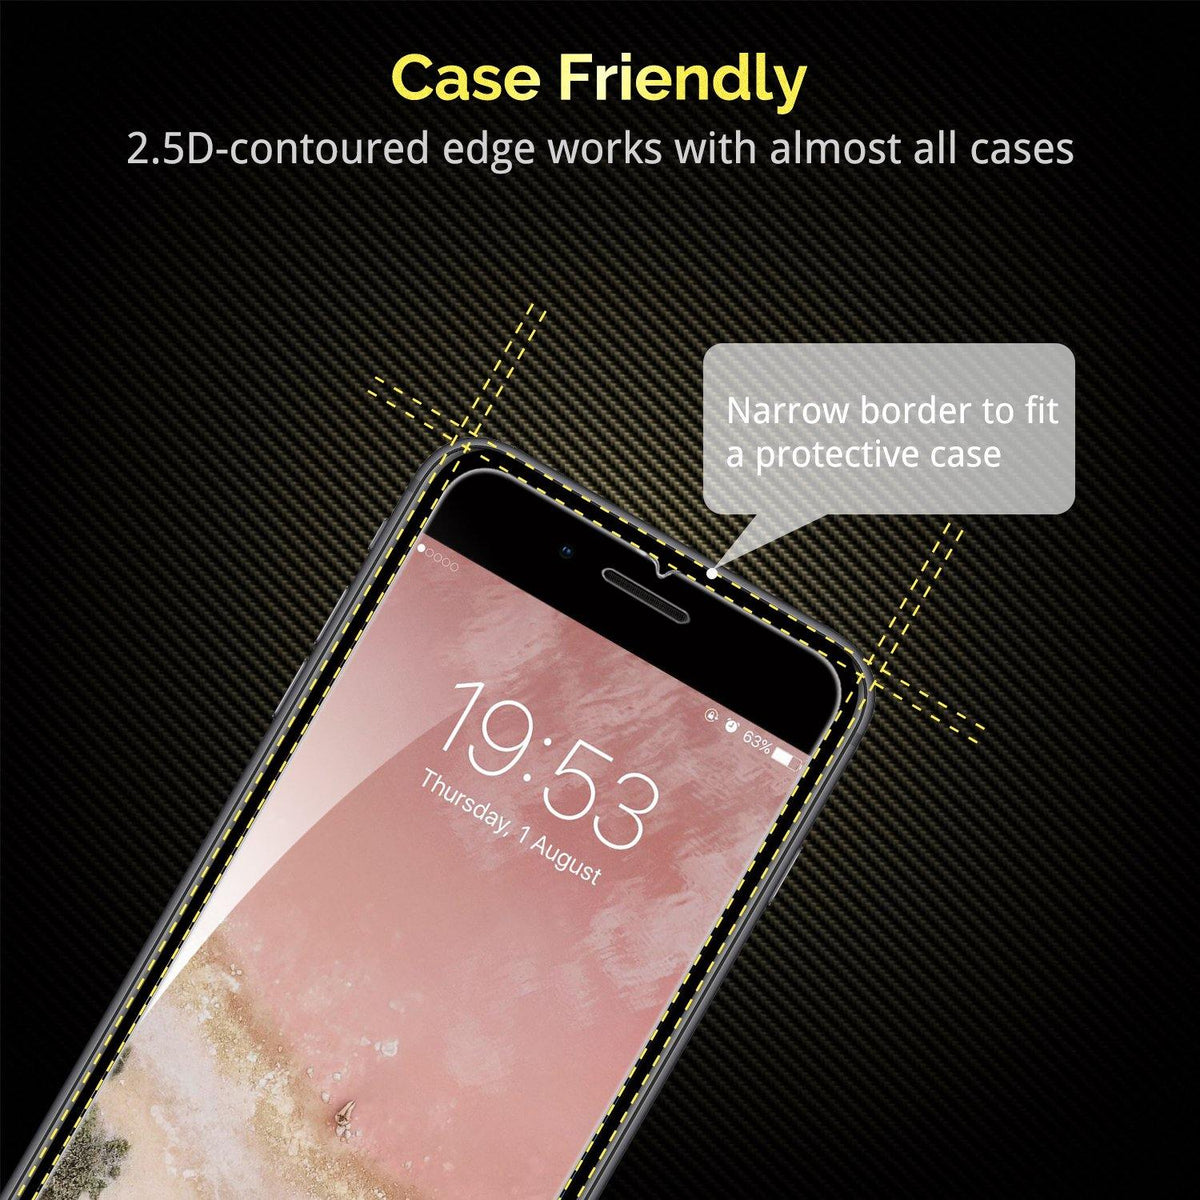 iPhone SE 2020 Screen Protector - 3 Packs - Screen Protector